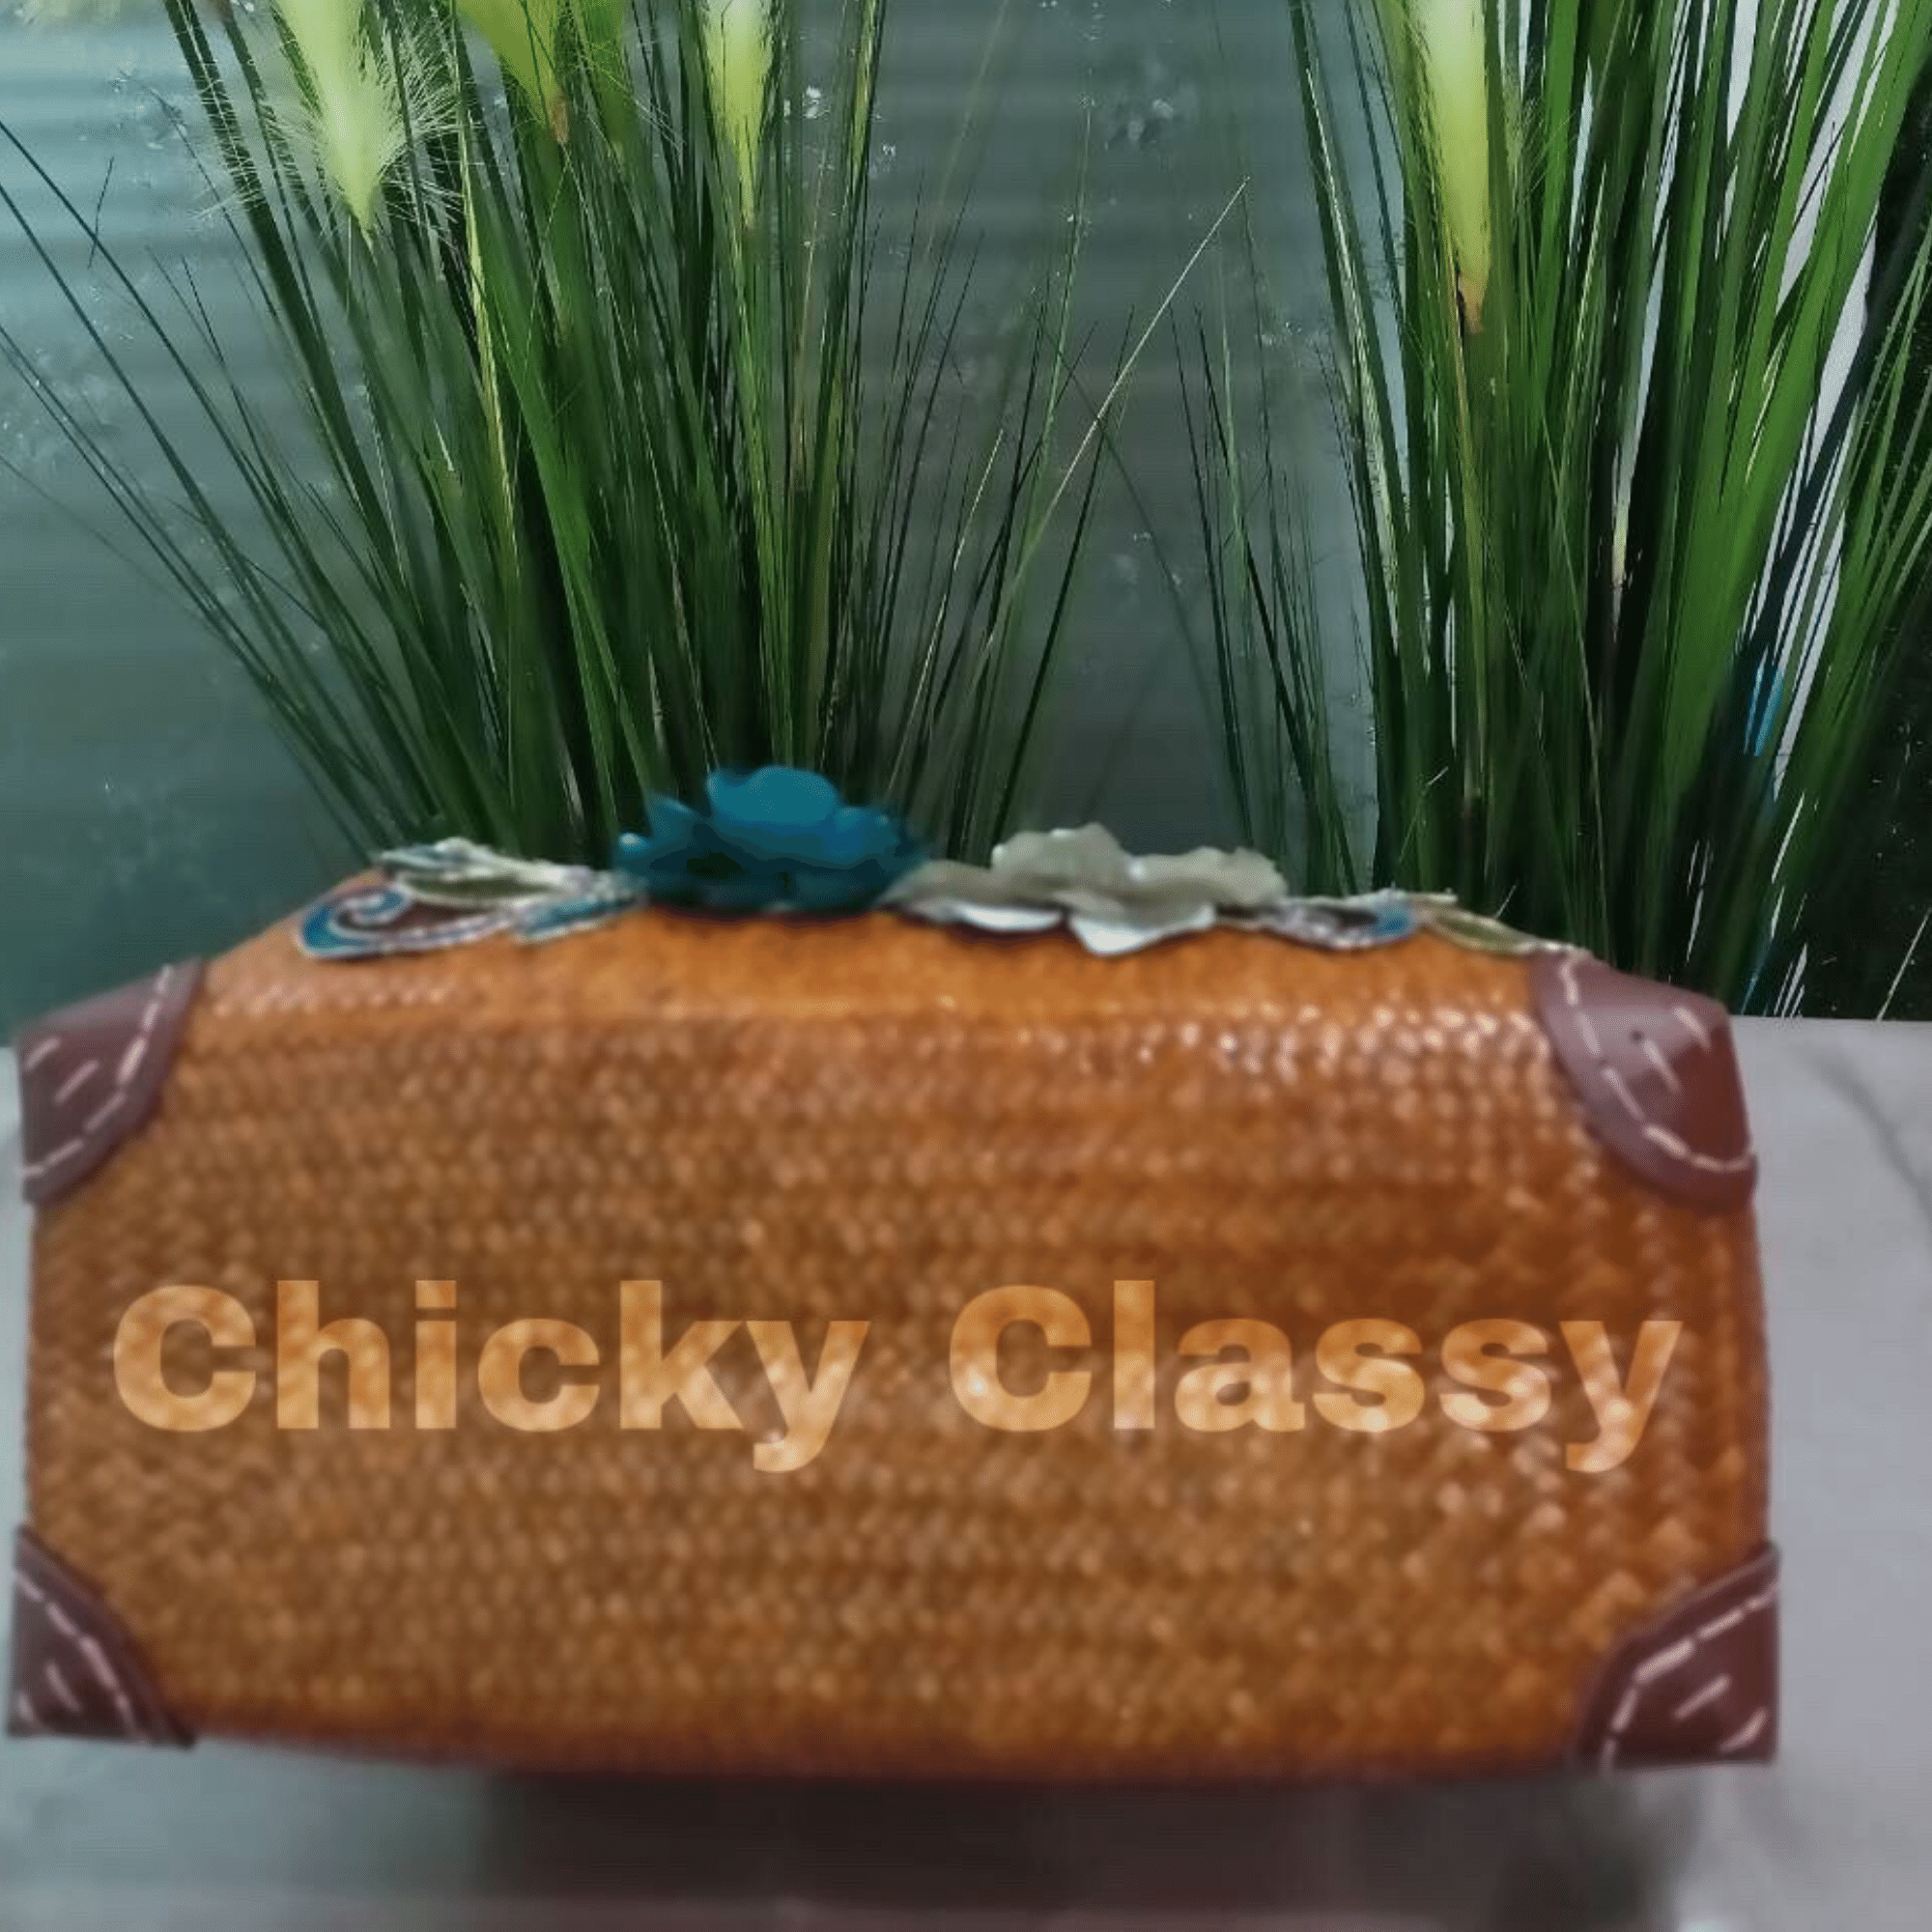 I am cute chicky classy hand made bag